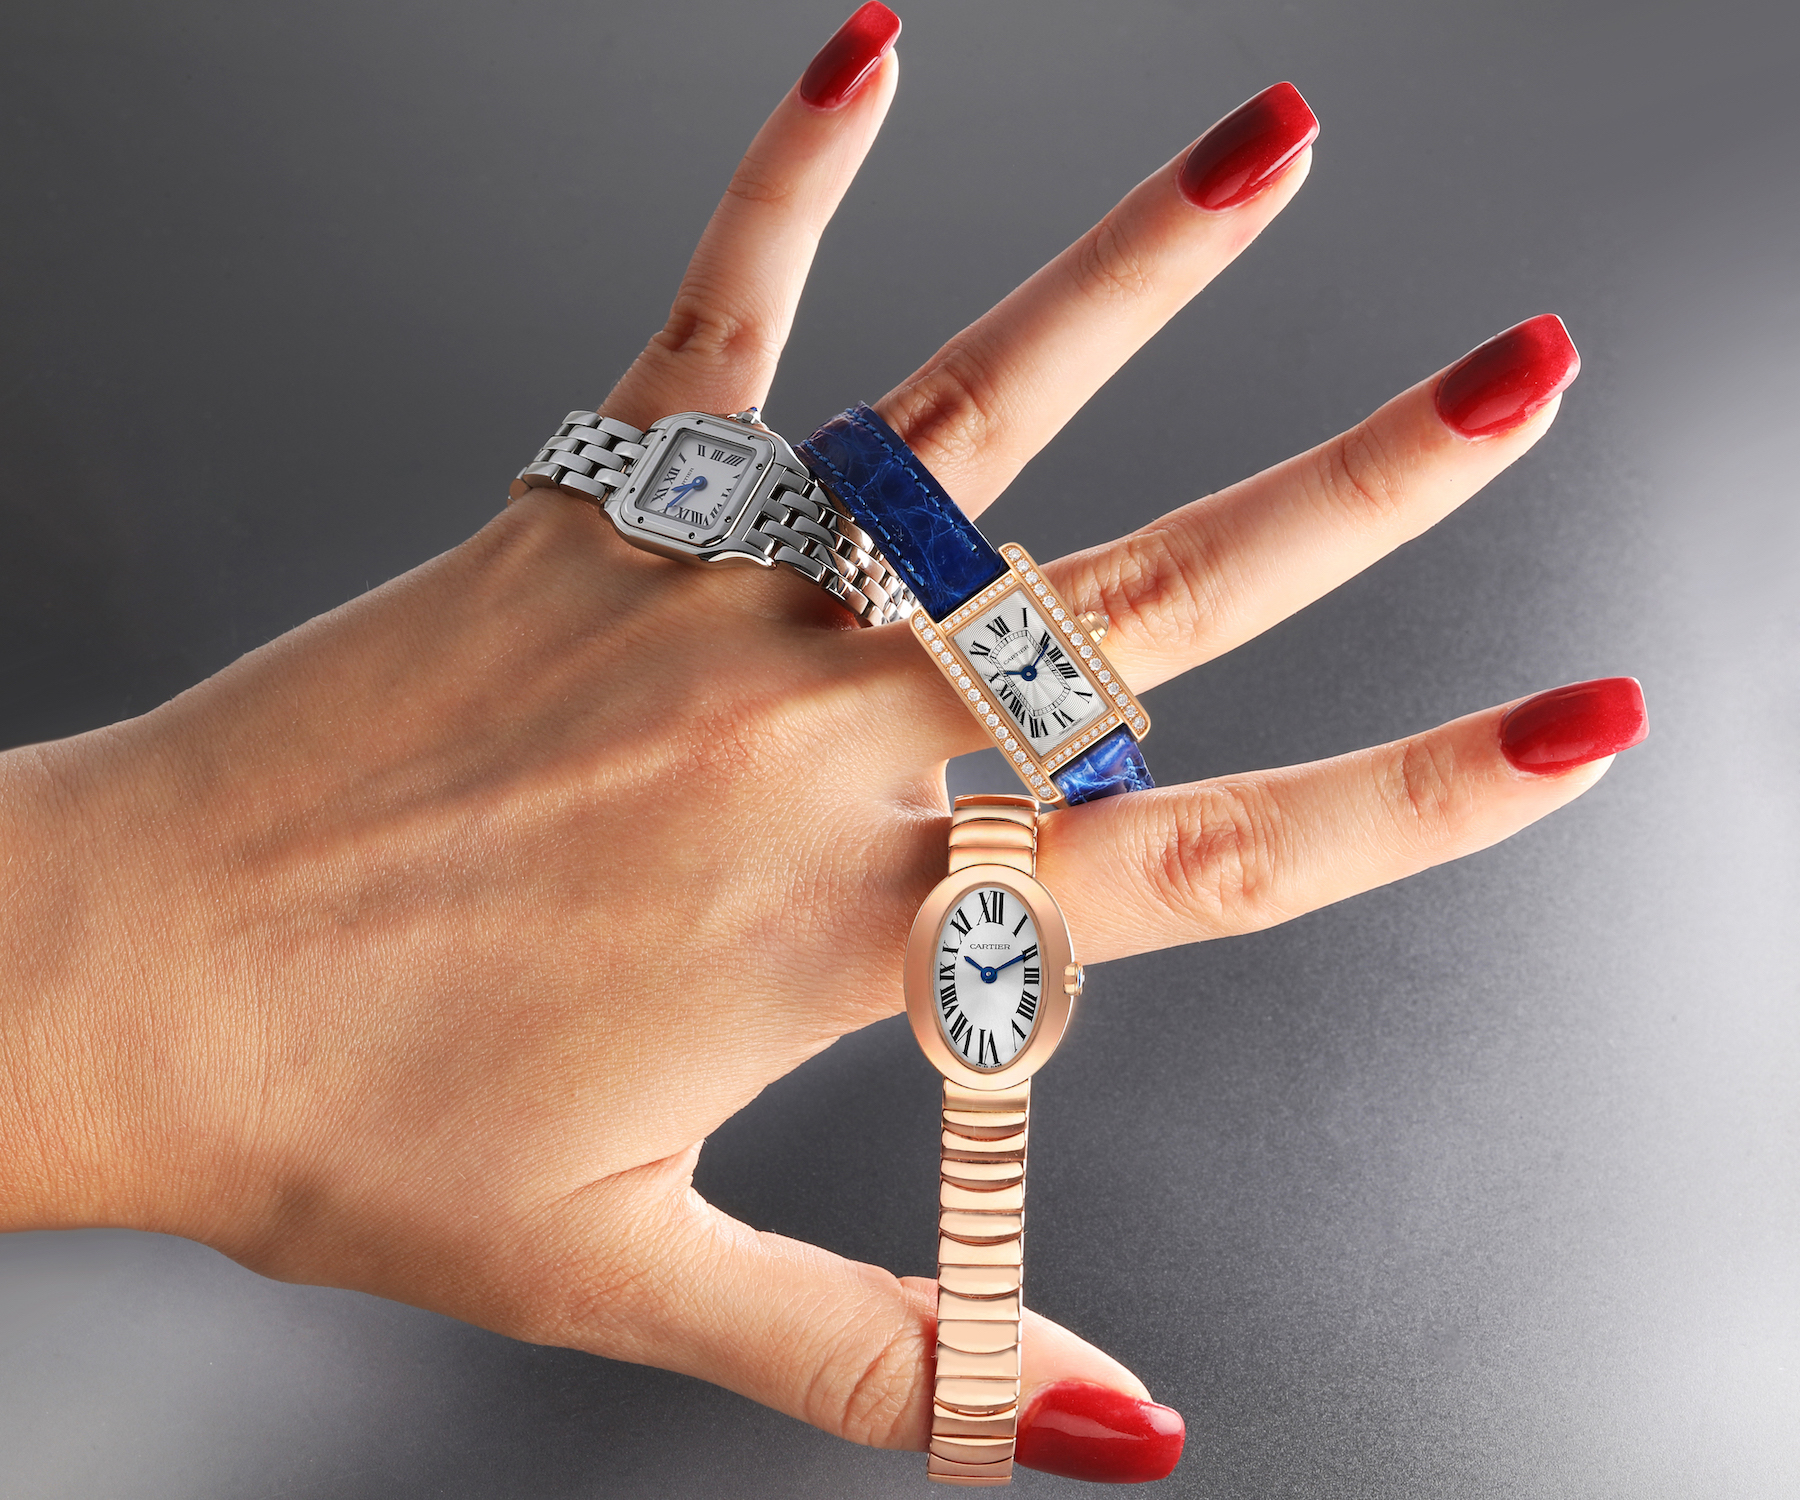 Designer Heart Shaped Monel Metal Steel Band Quartz Wrist Watch For Women  Hot Brand, Wholesale Gift With From Luxurynewshop, $3.53 | DHgate.Com